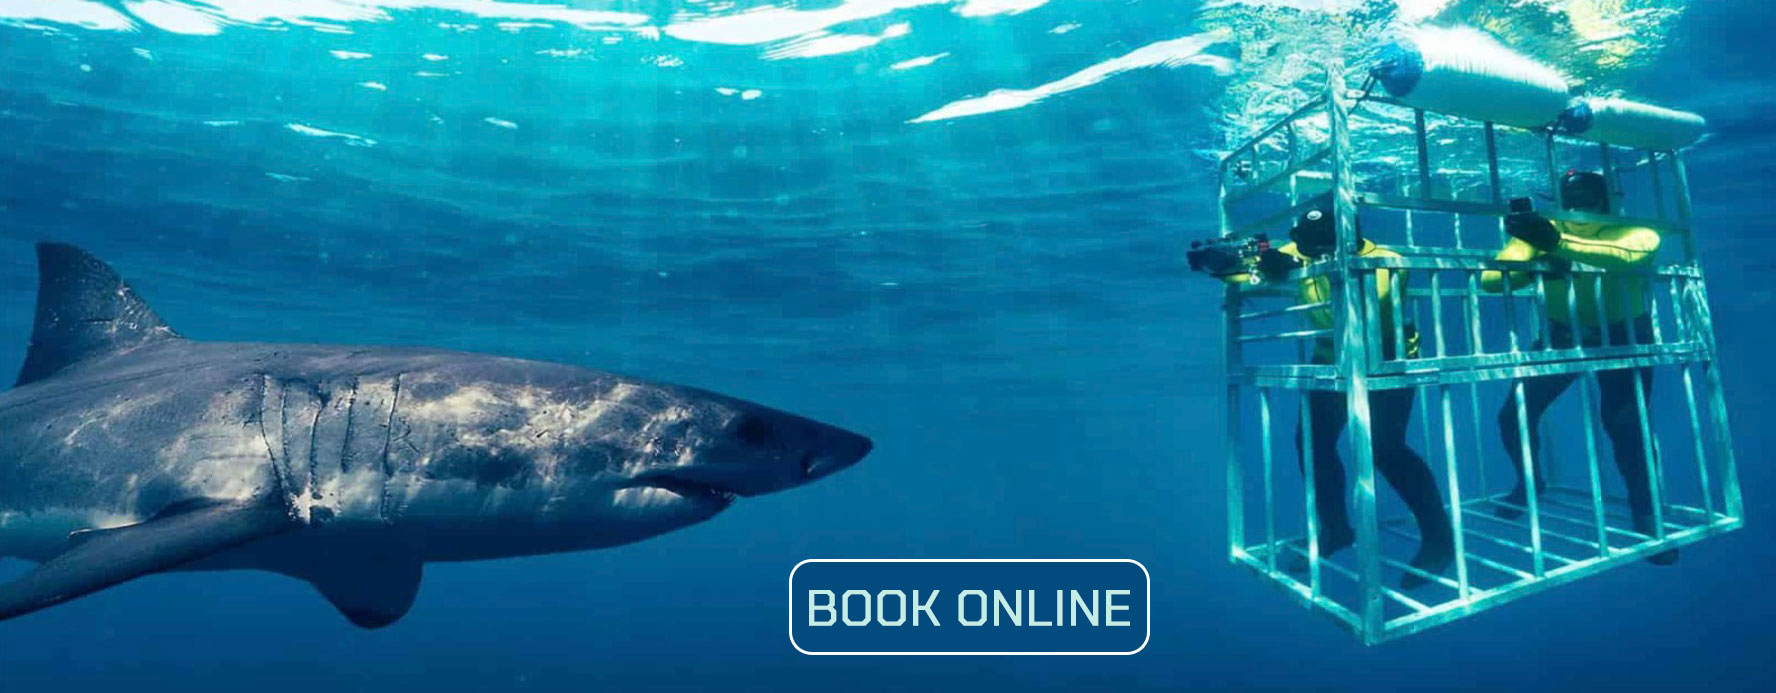 WSP shark cage diving book online